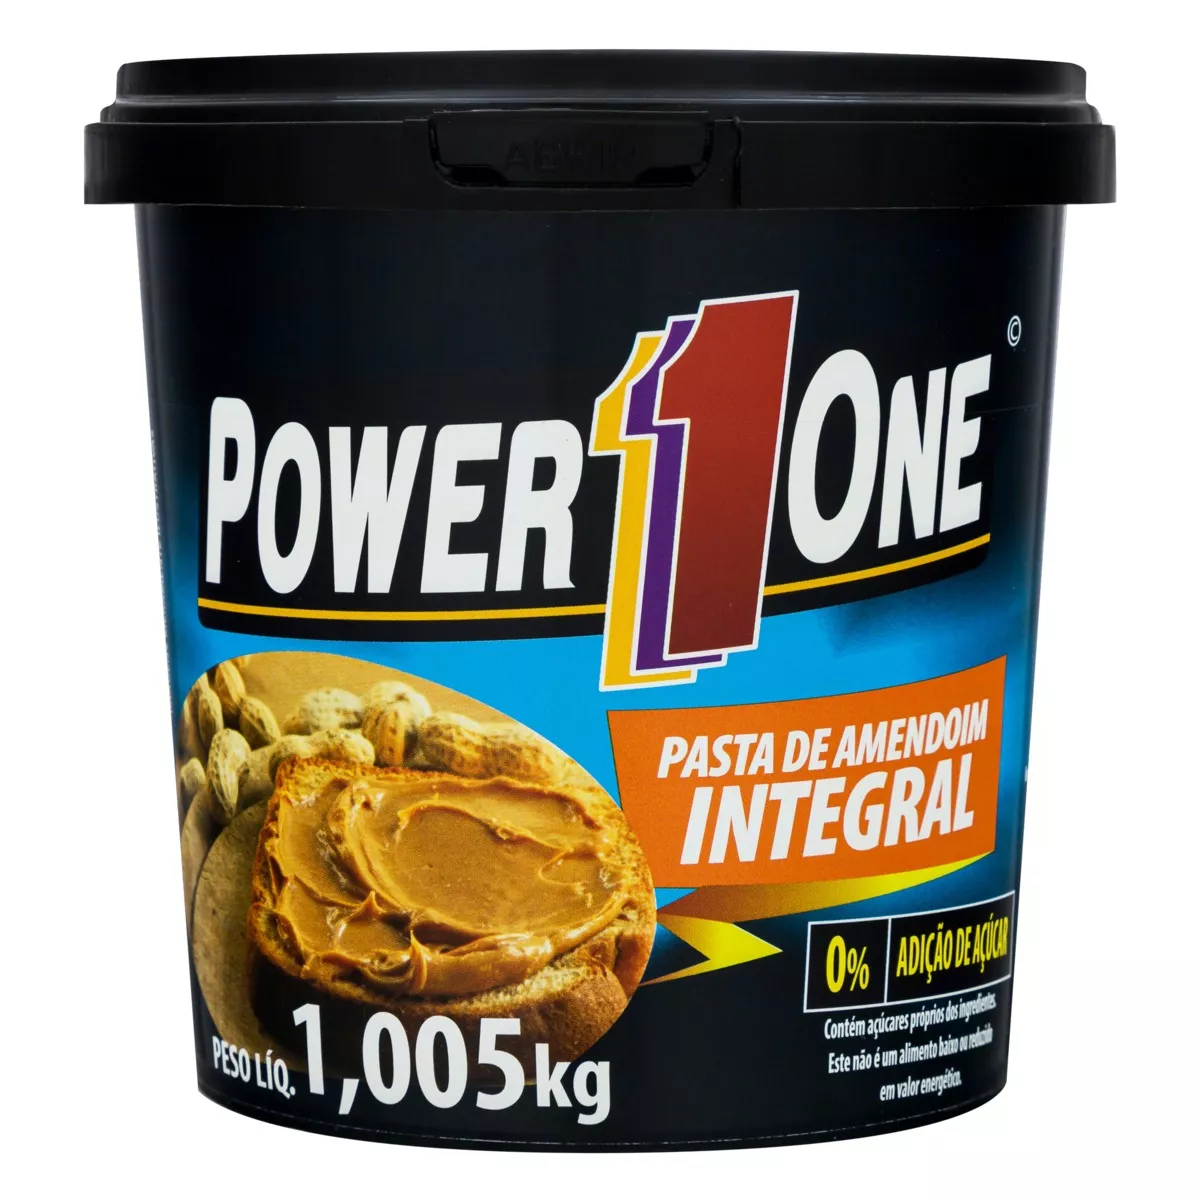 Pasta De Amendoim Integral Power 1 One Pote 1,005kg